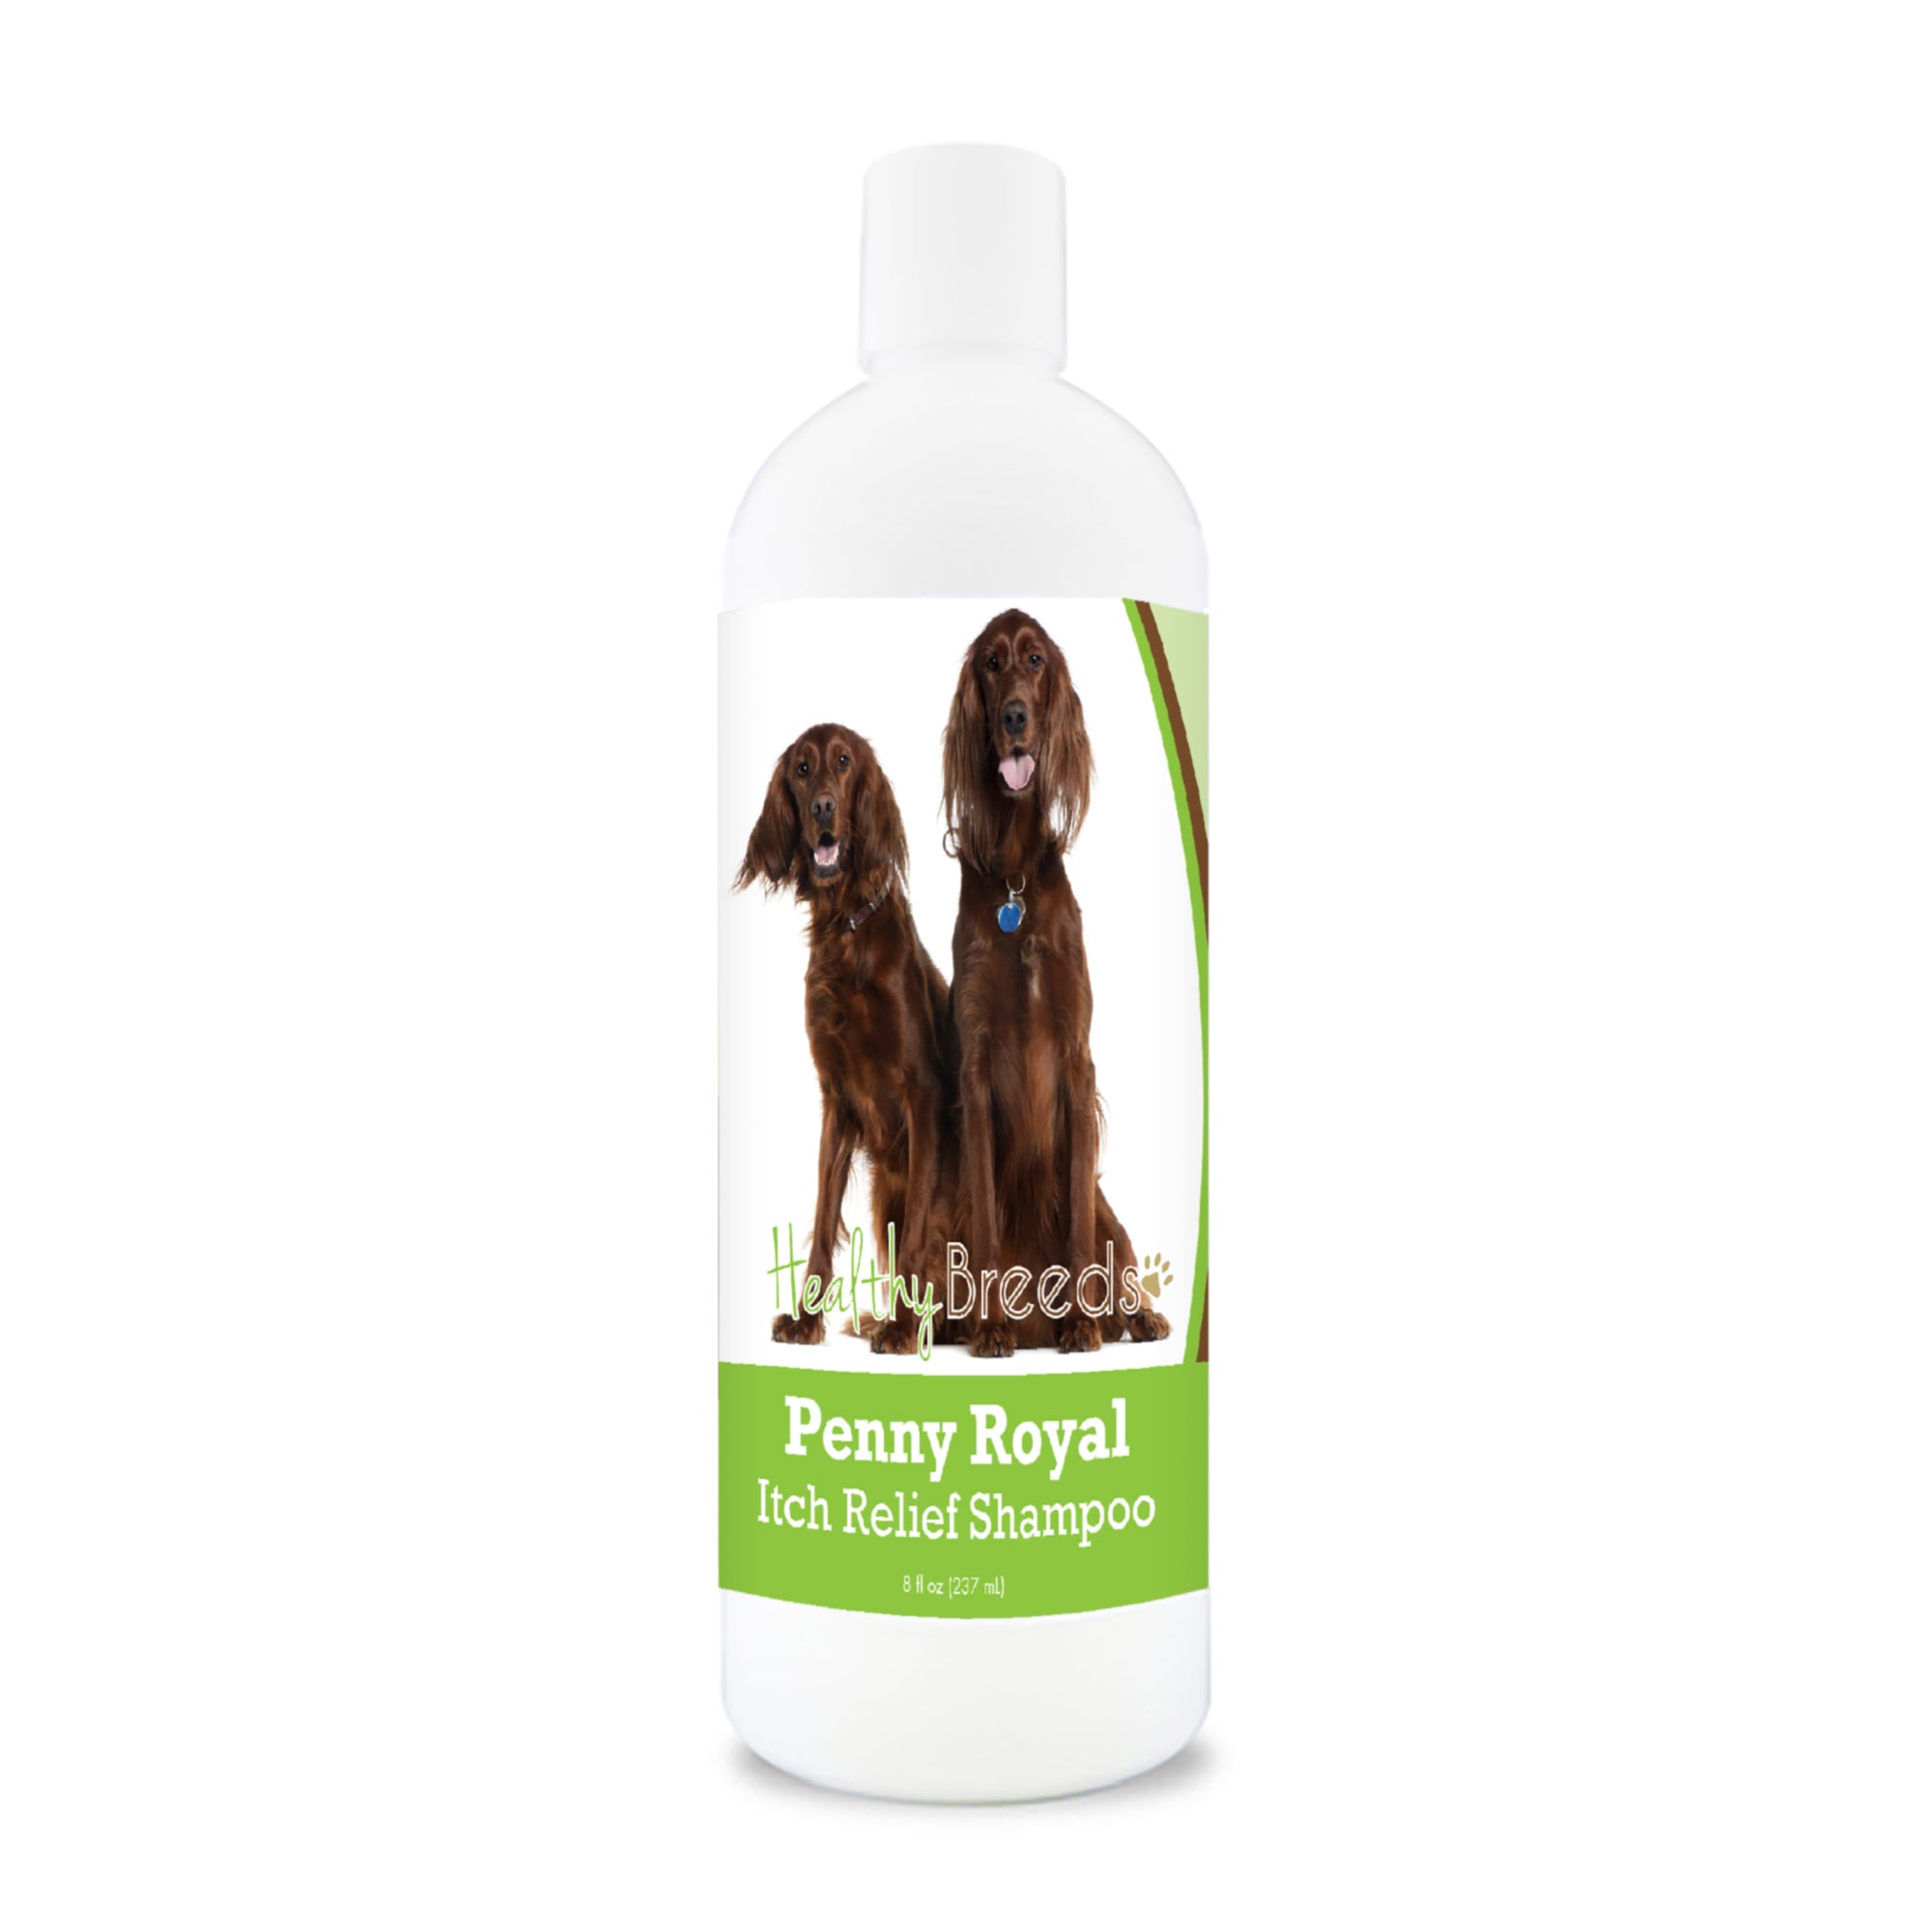 Healthy Breeds Irish Setter Penny Royal Itch Relief Shampoo 8 oz